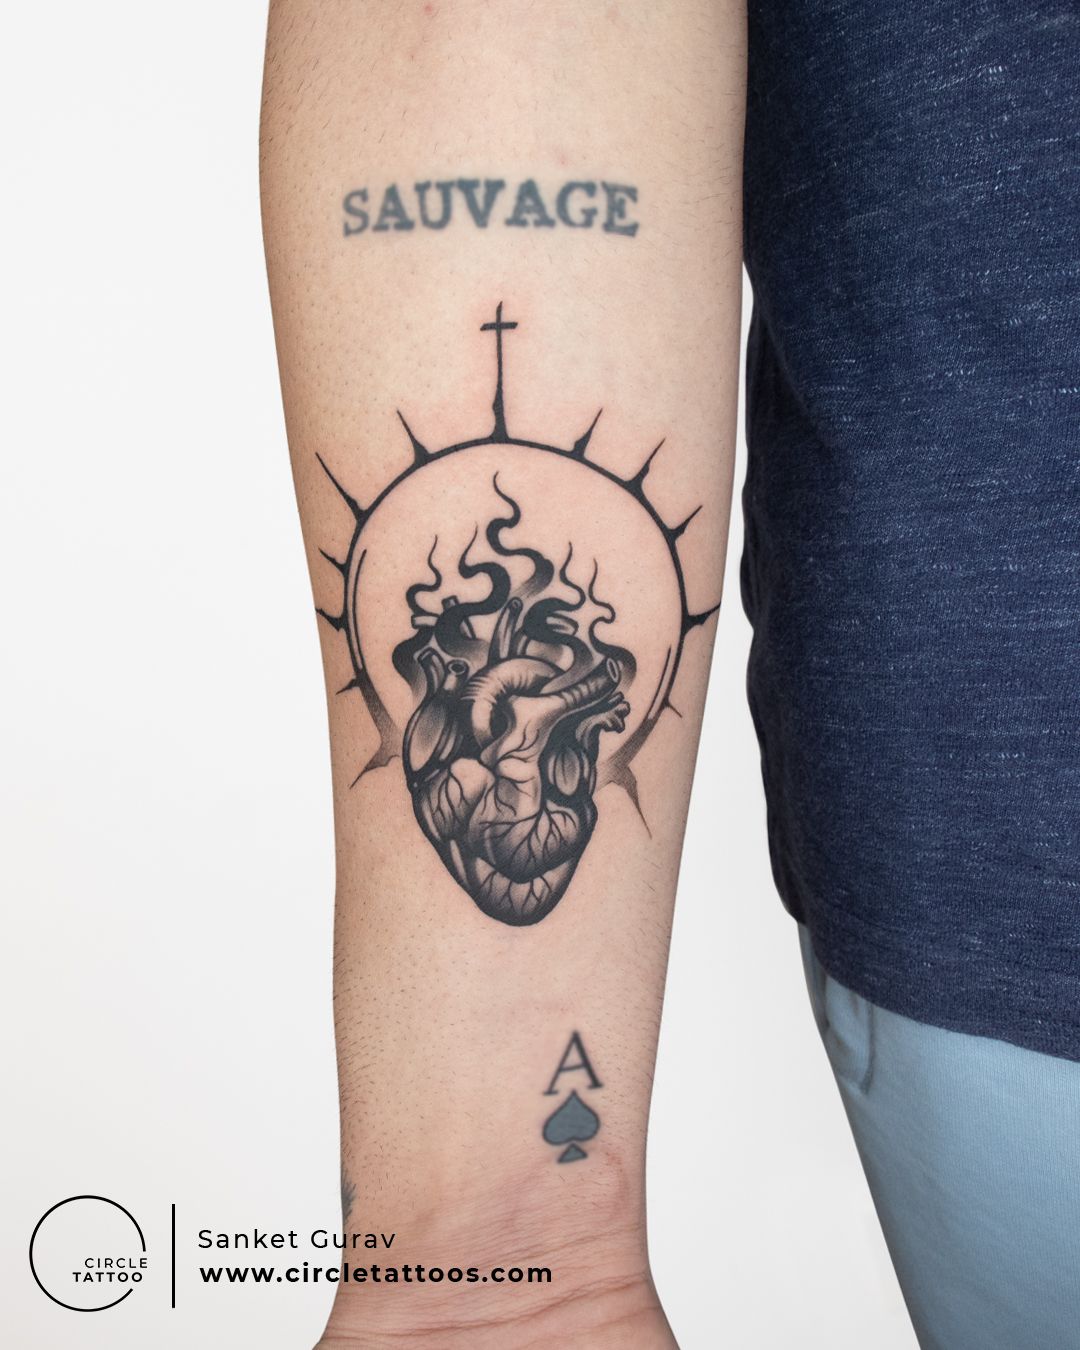 Tattoo uploaded by Circle Tattoo • Arm Band Tattoo done by Sanket Gurav at  Circle Tattoo • Tattoodo